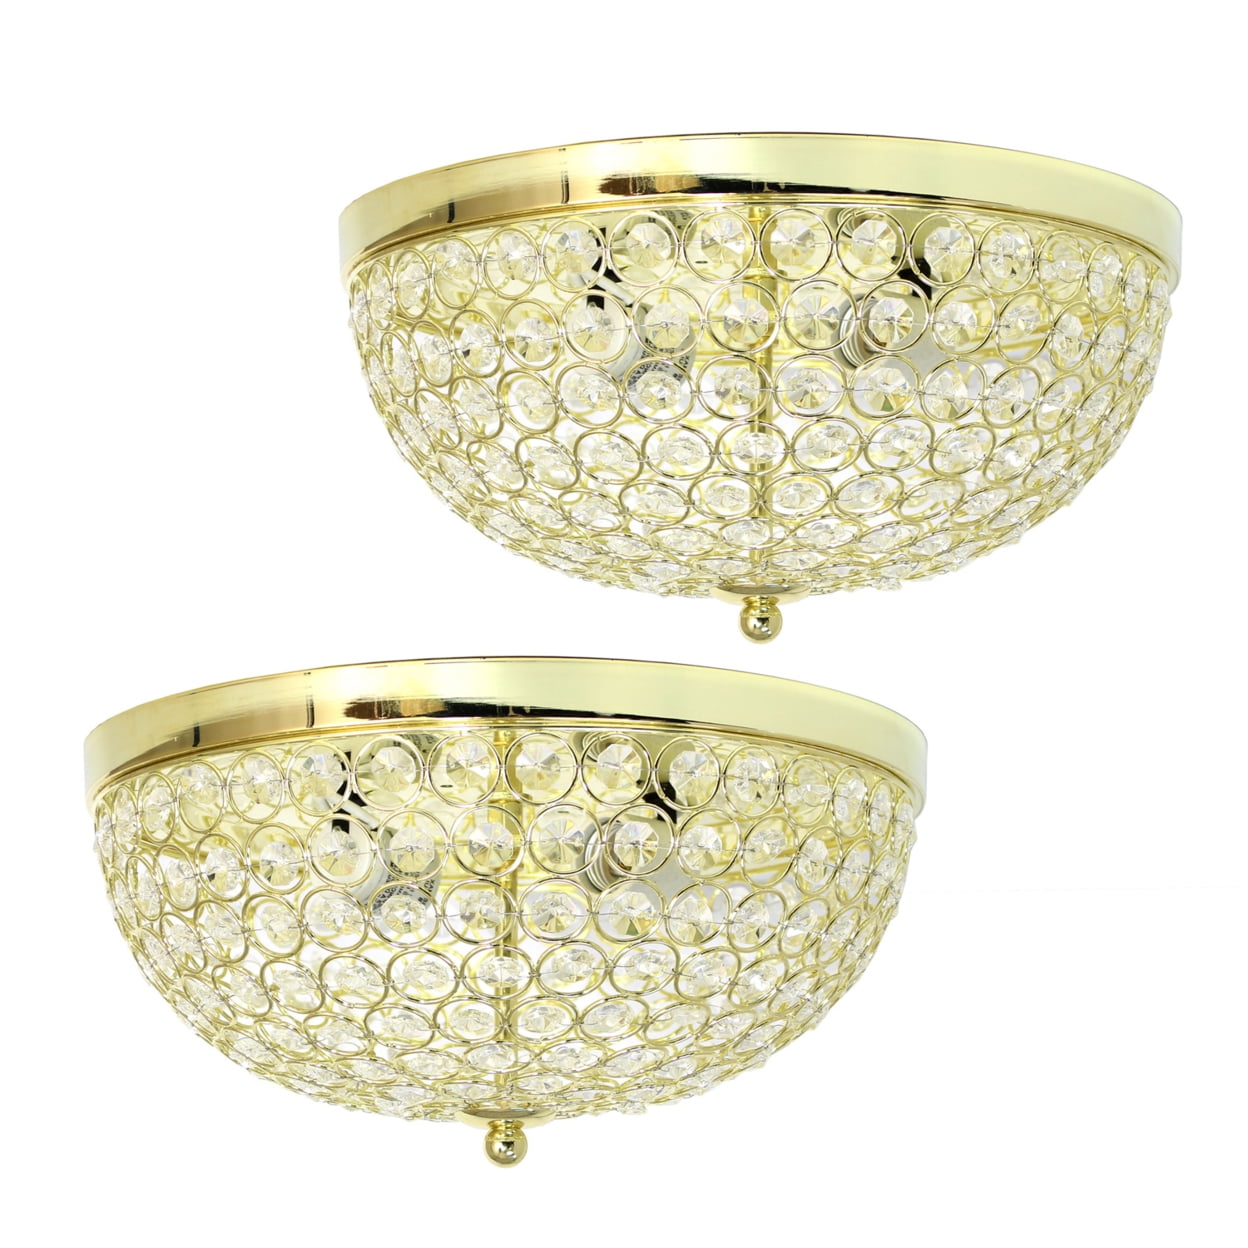 Elegant Designs Fm1000-gld-2pk 2 Light Elipse Crystal Flush Mount Ceiling Light, Gold - Pack Of 2